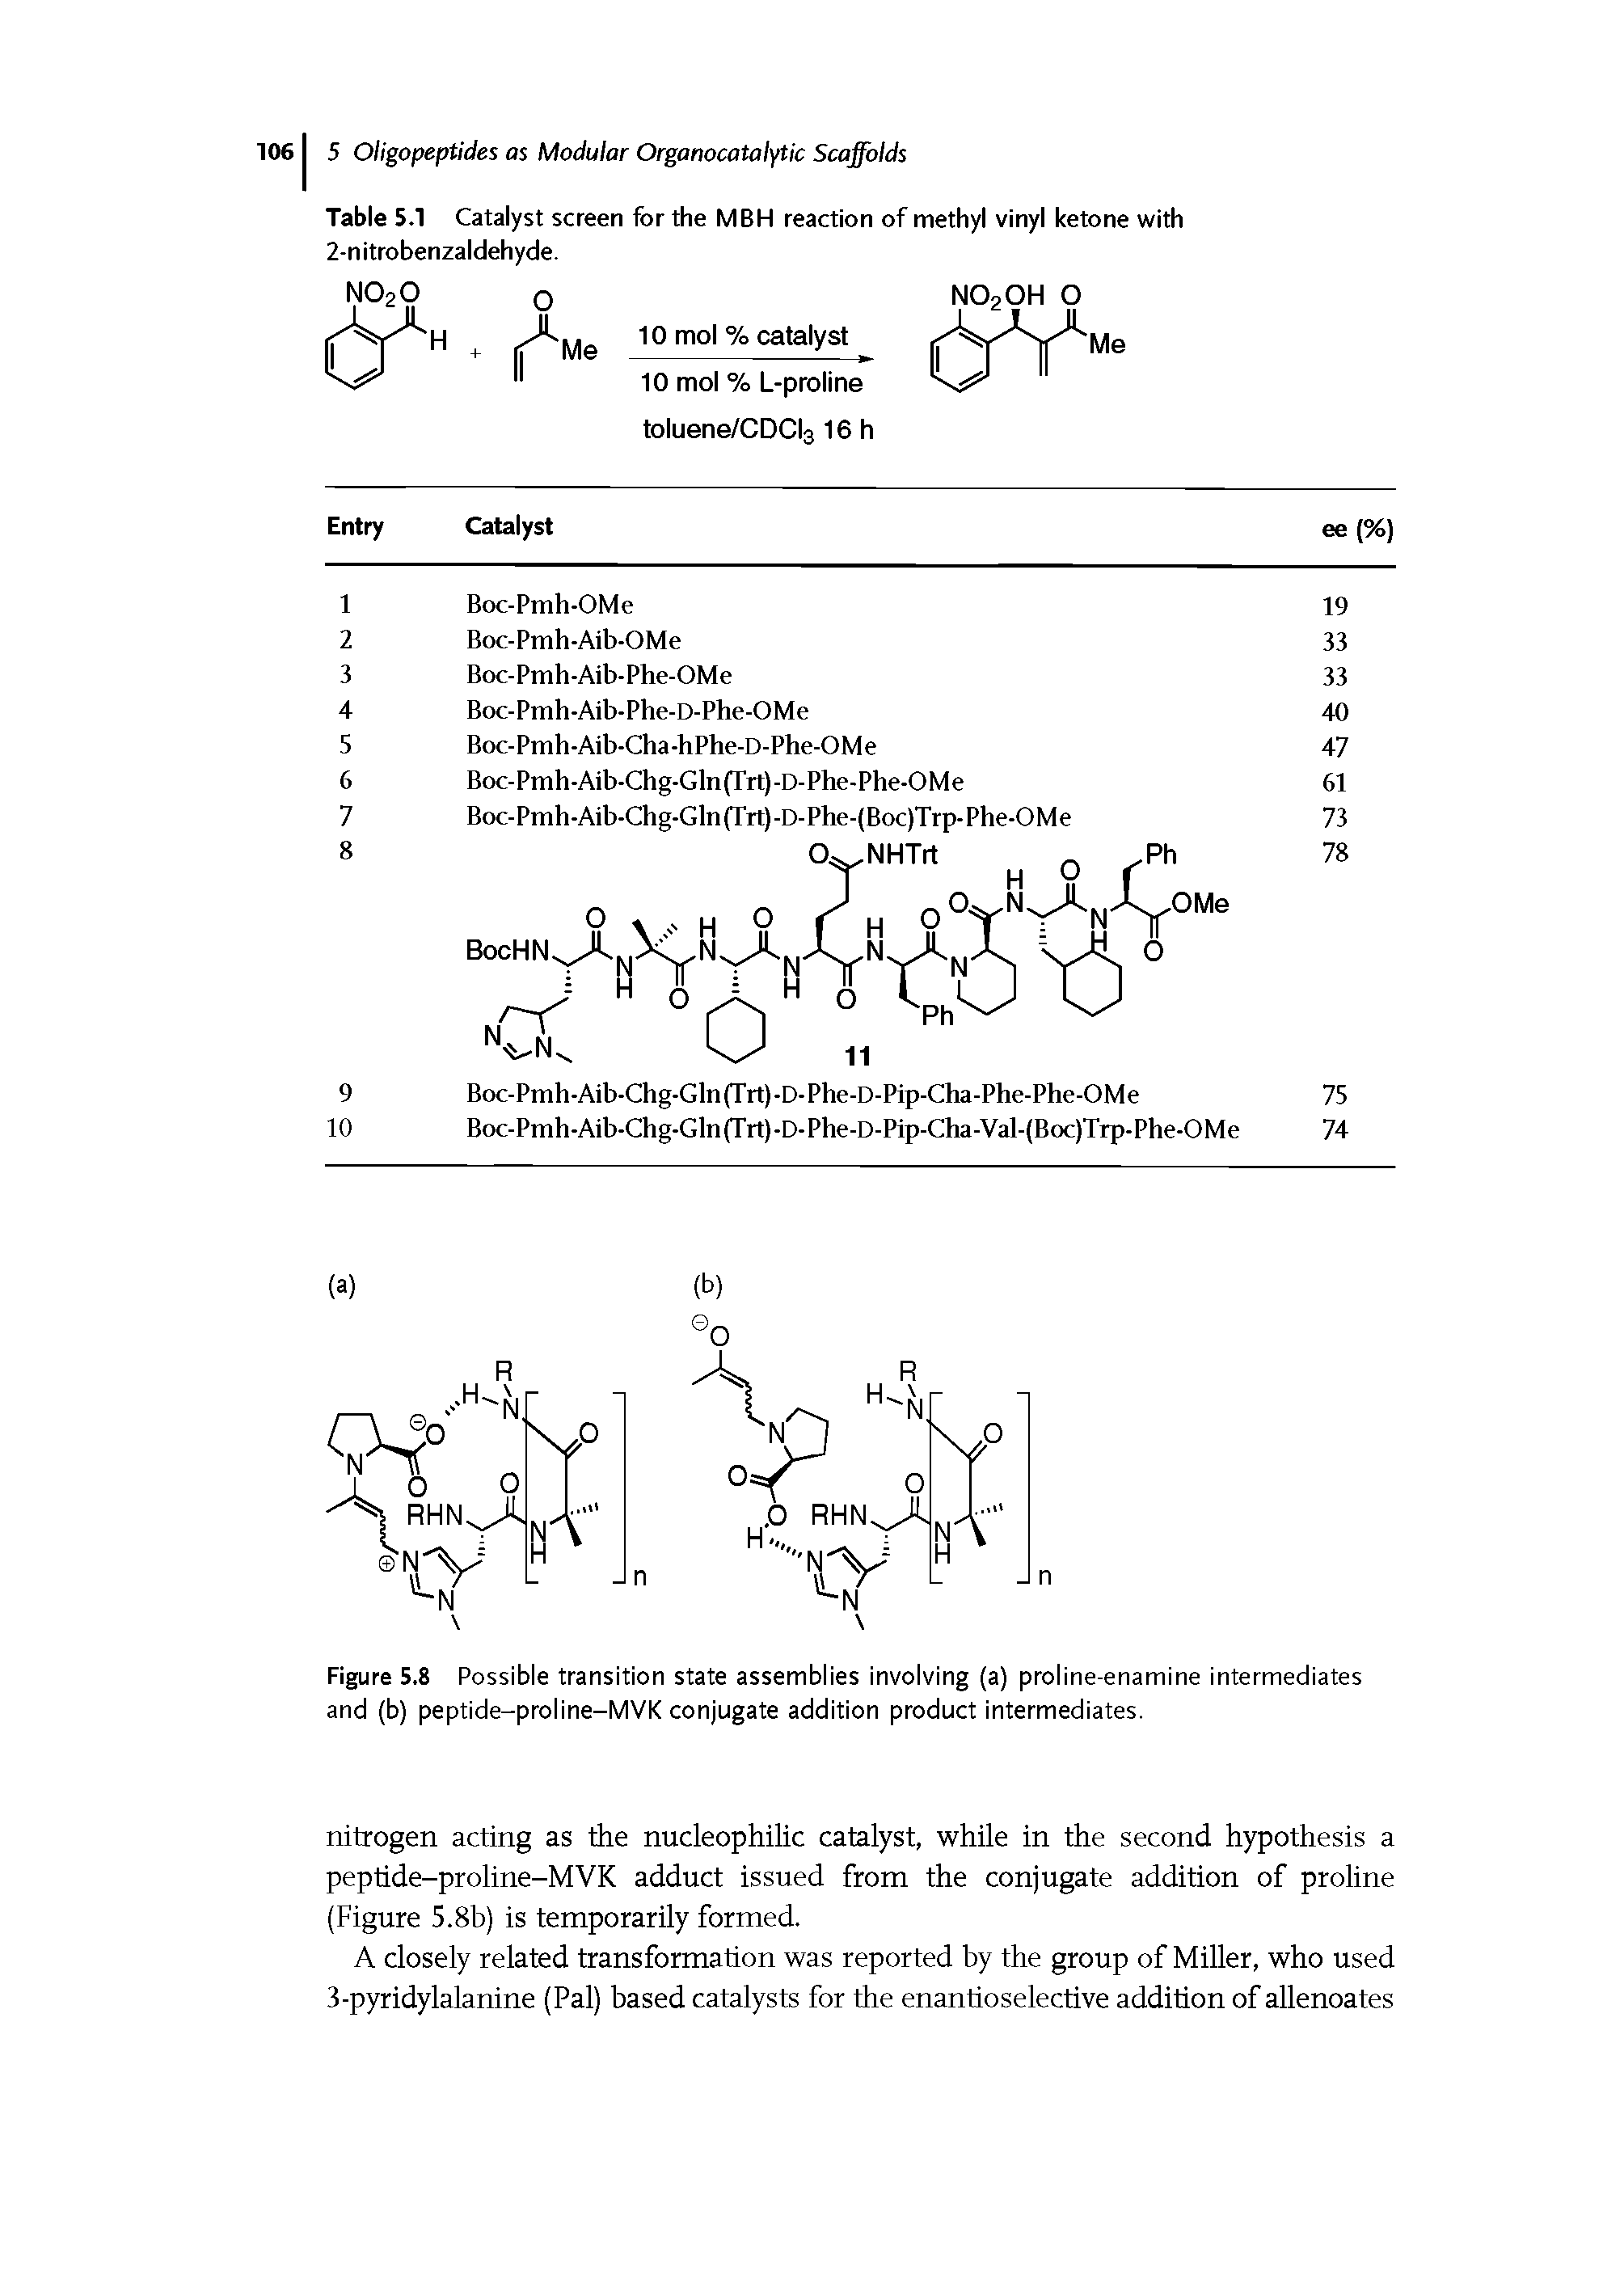 Figure 5.8 Possible transition state assemblies involving (a) proline-enamine intermediates and (b) peptide-proline-MVK conjugate addition product intermediates.